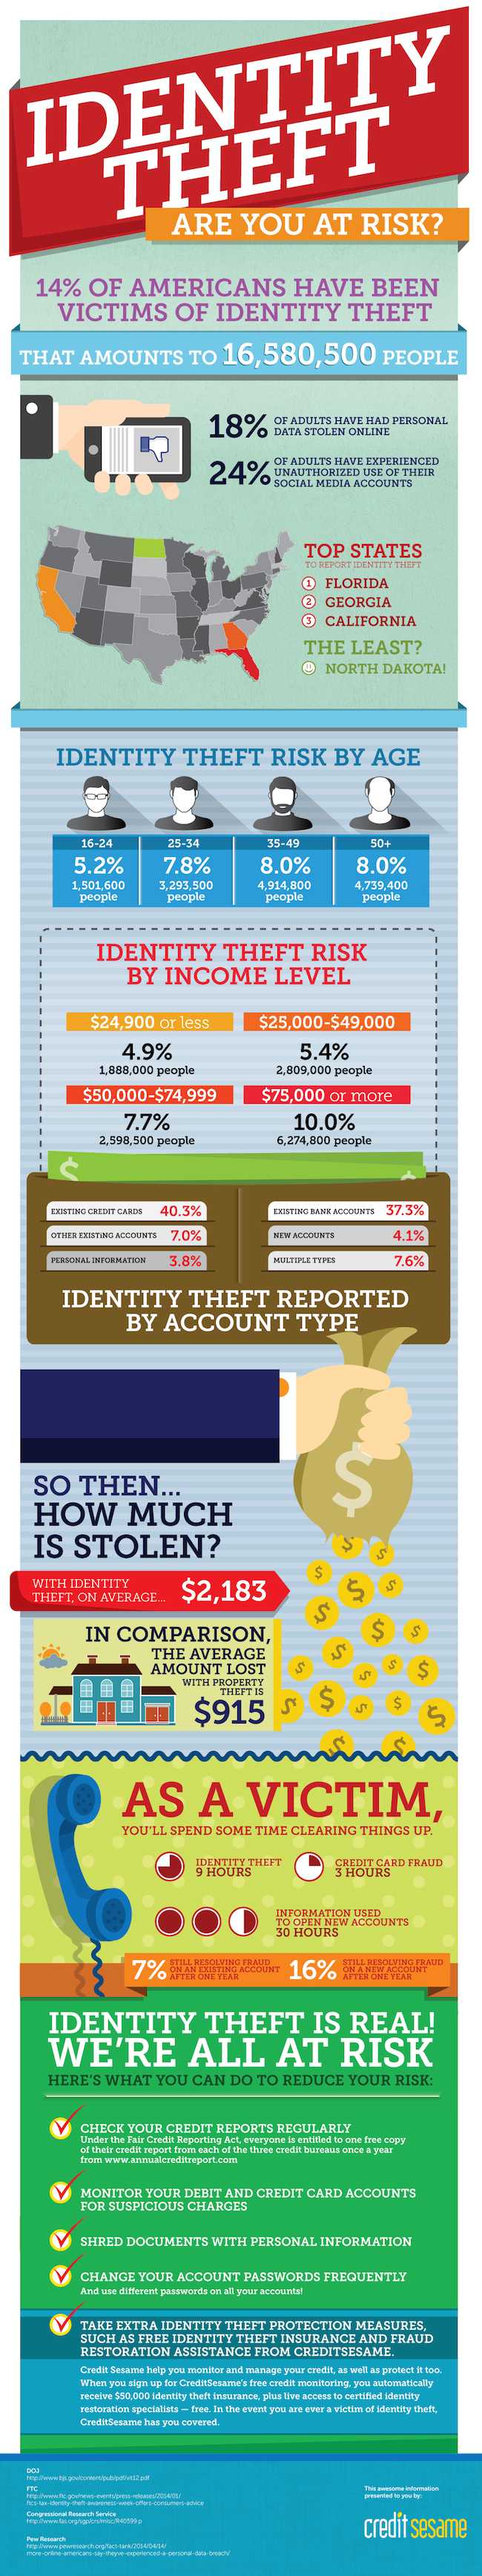 credit-sesame-identity-theft